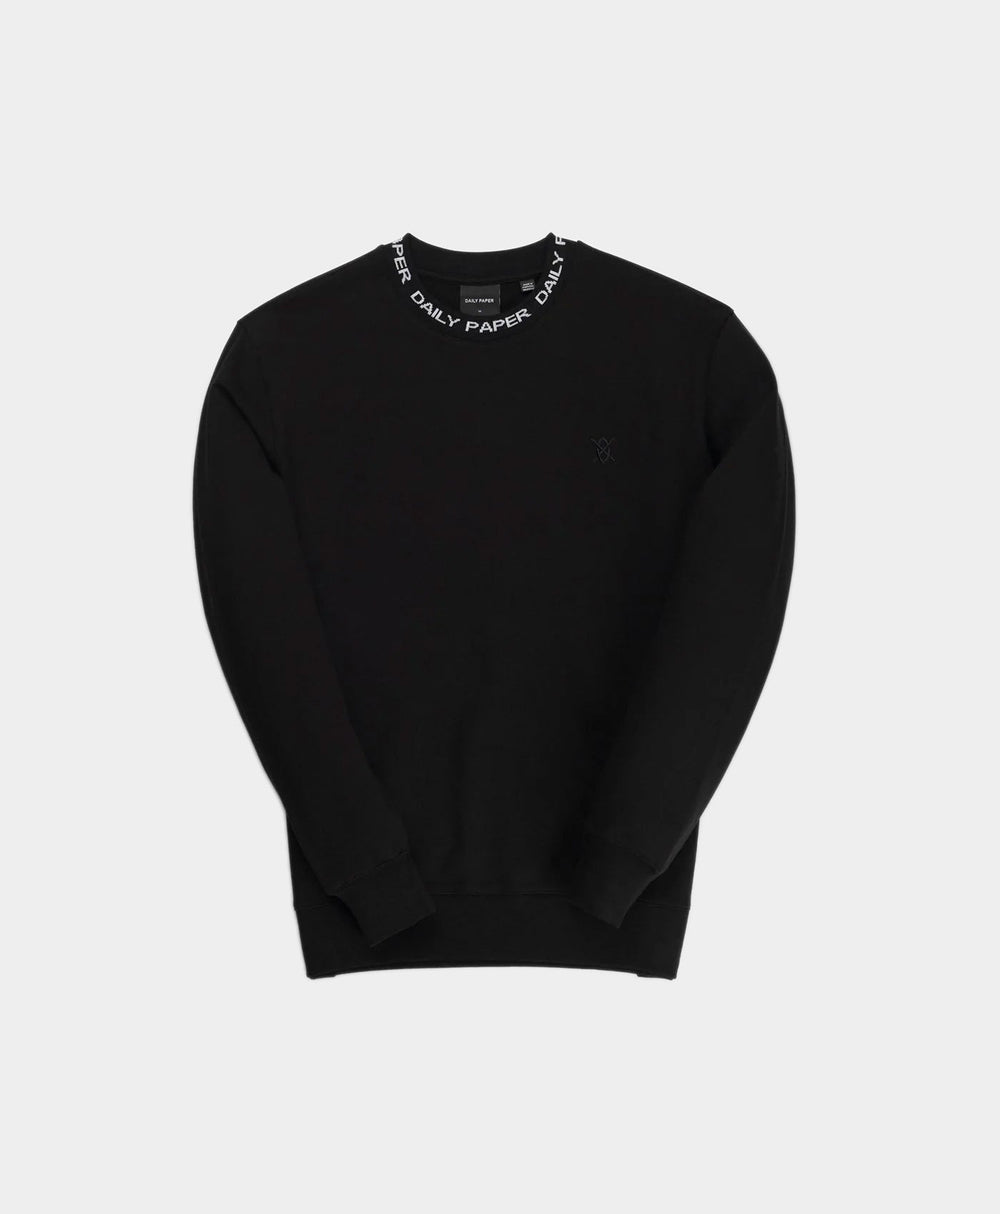 DP - Black Erib Sweater - Packshot - Front